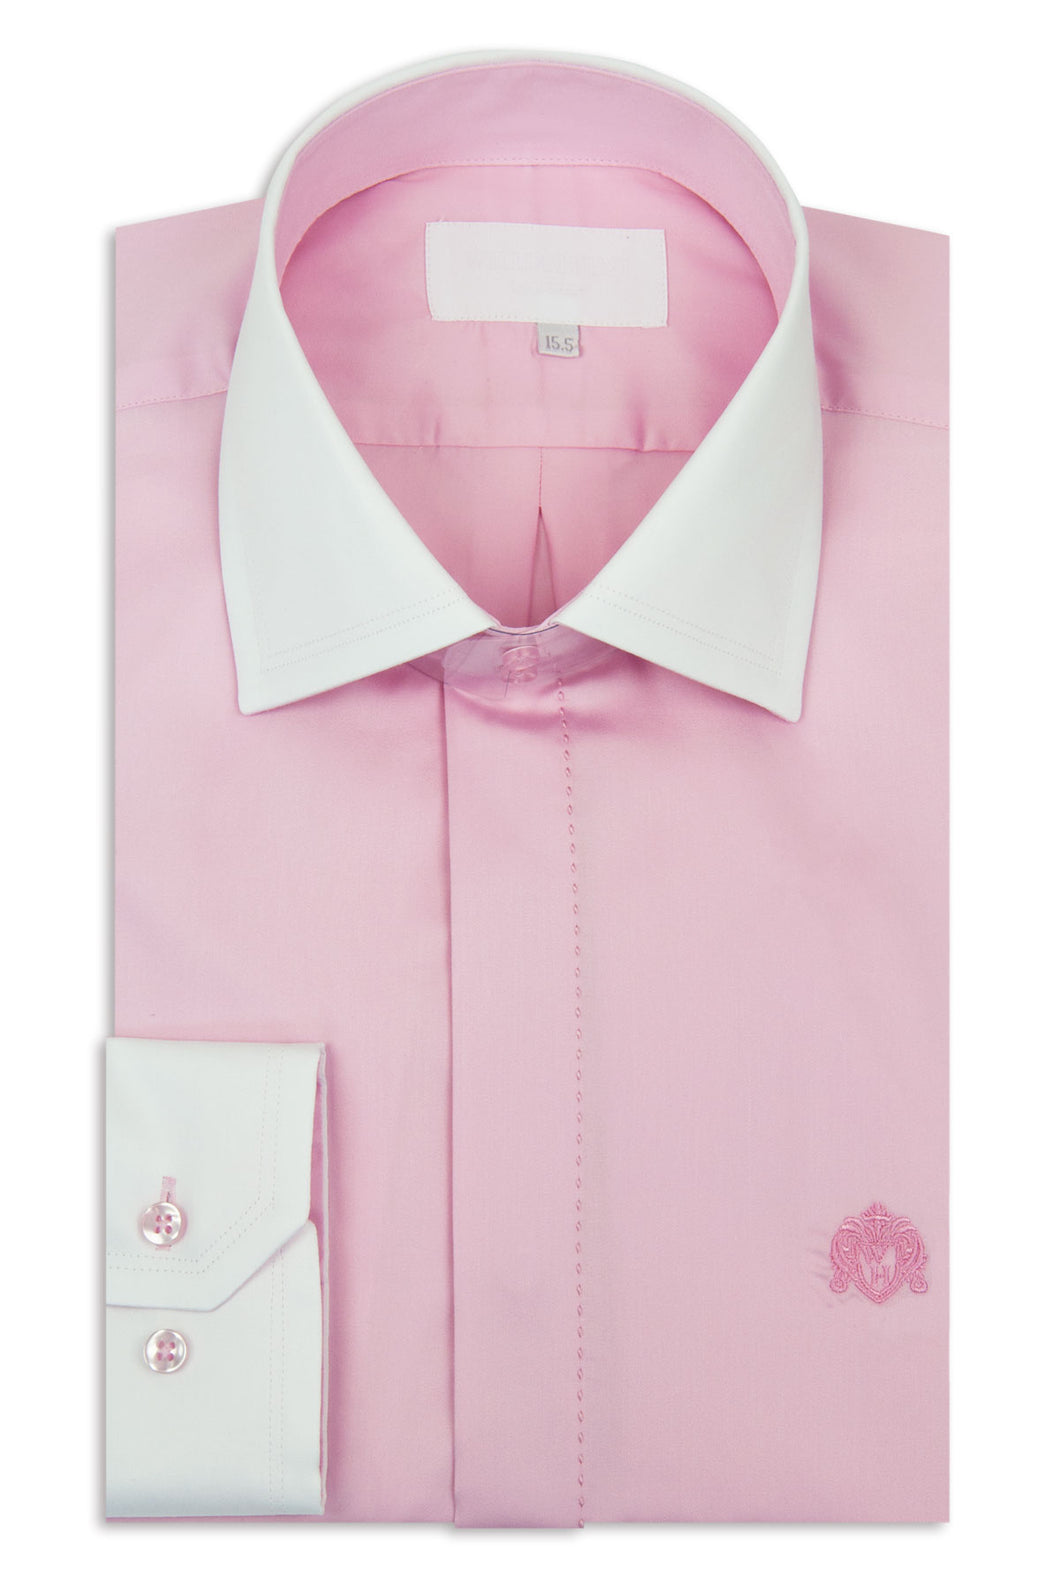 Pink Cutaway Collar Shirt with White Collar